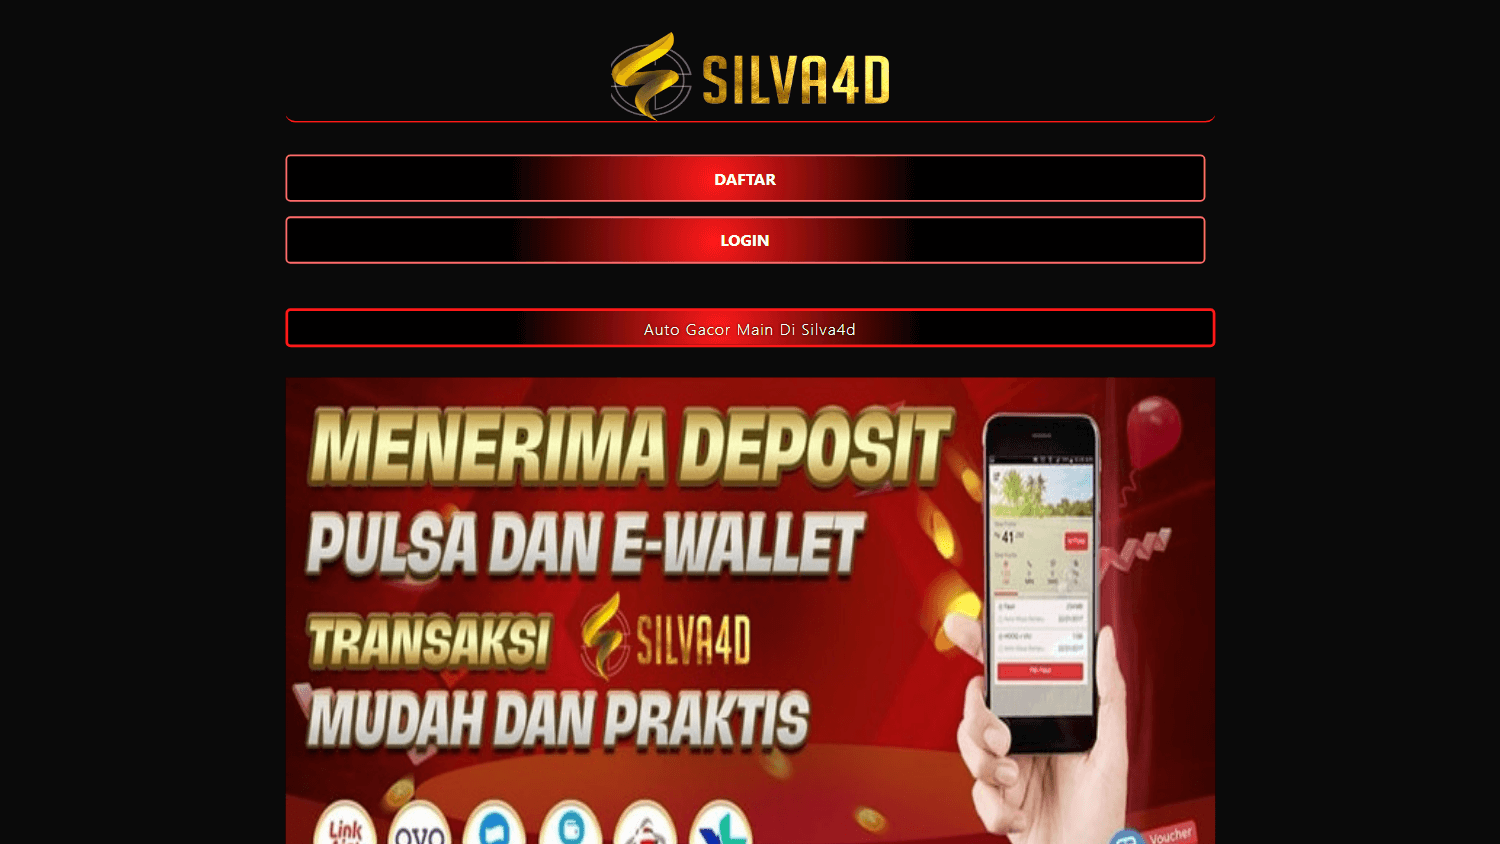 silva4d_casino_homepage_desktop